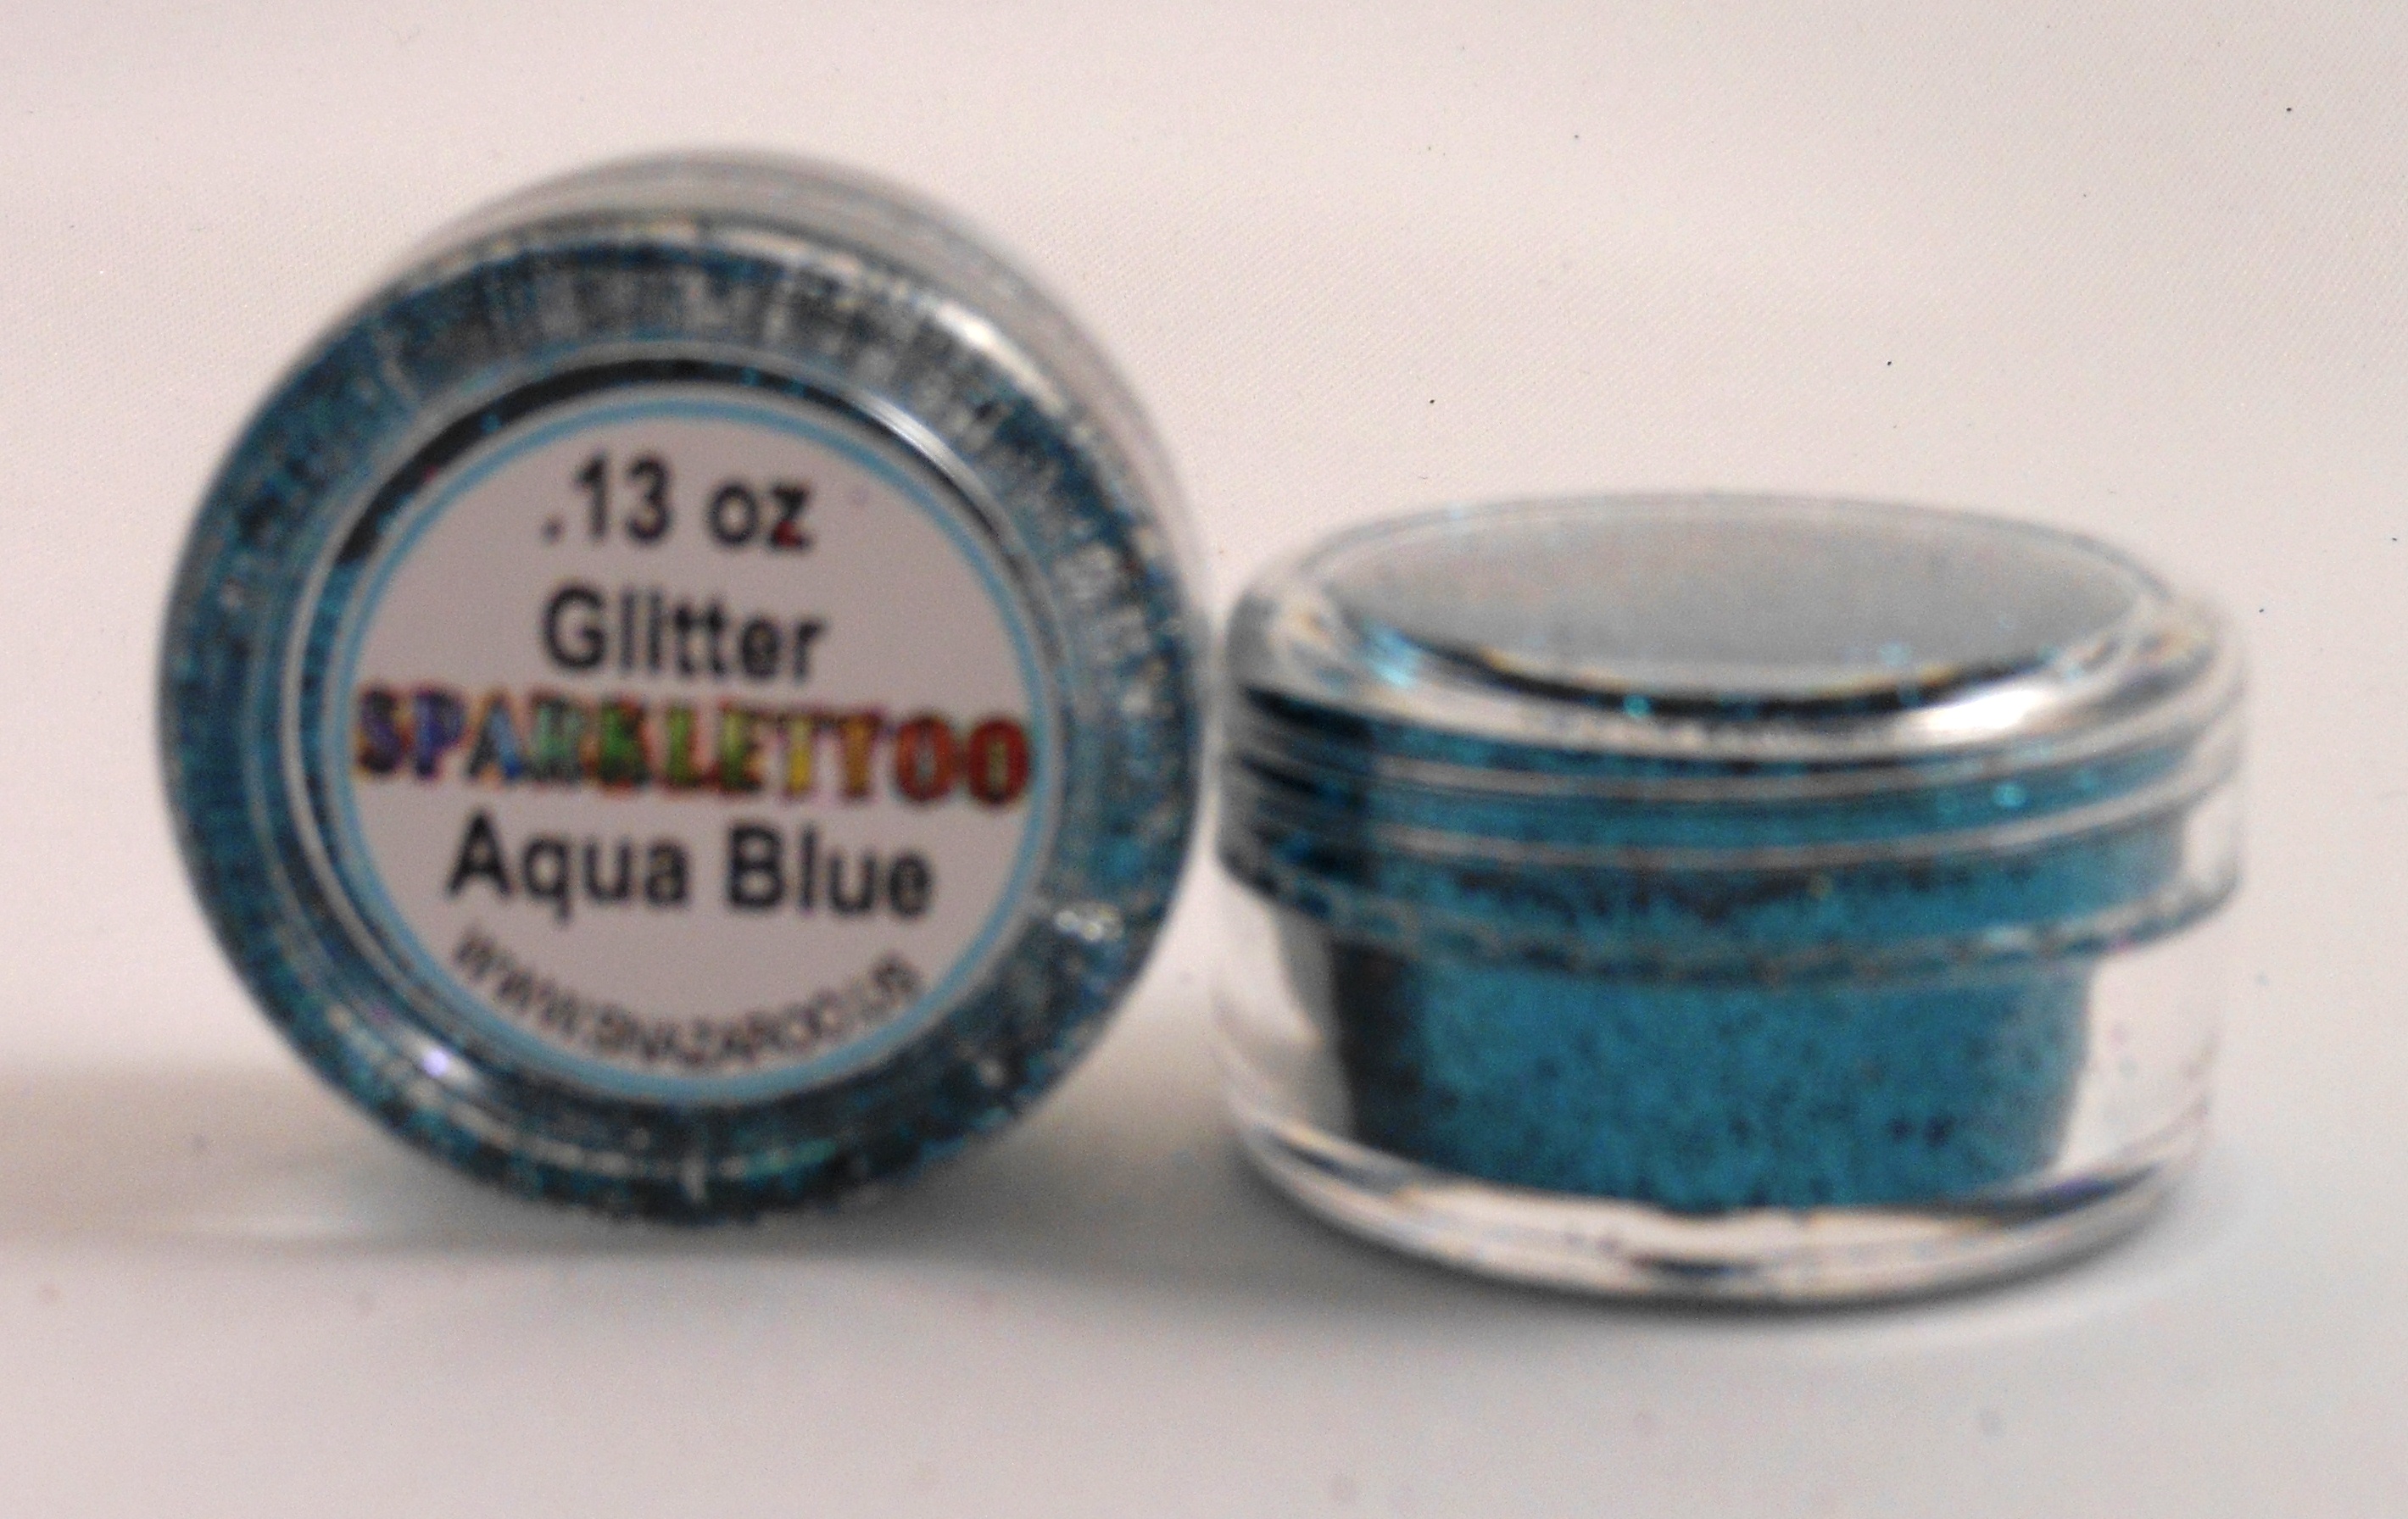 Glitter Aqua Blue .13 oz. 